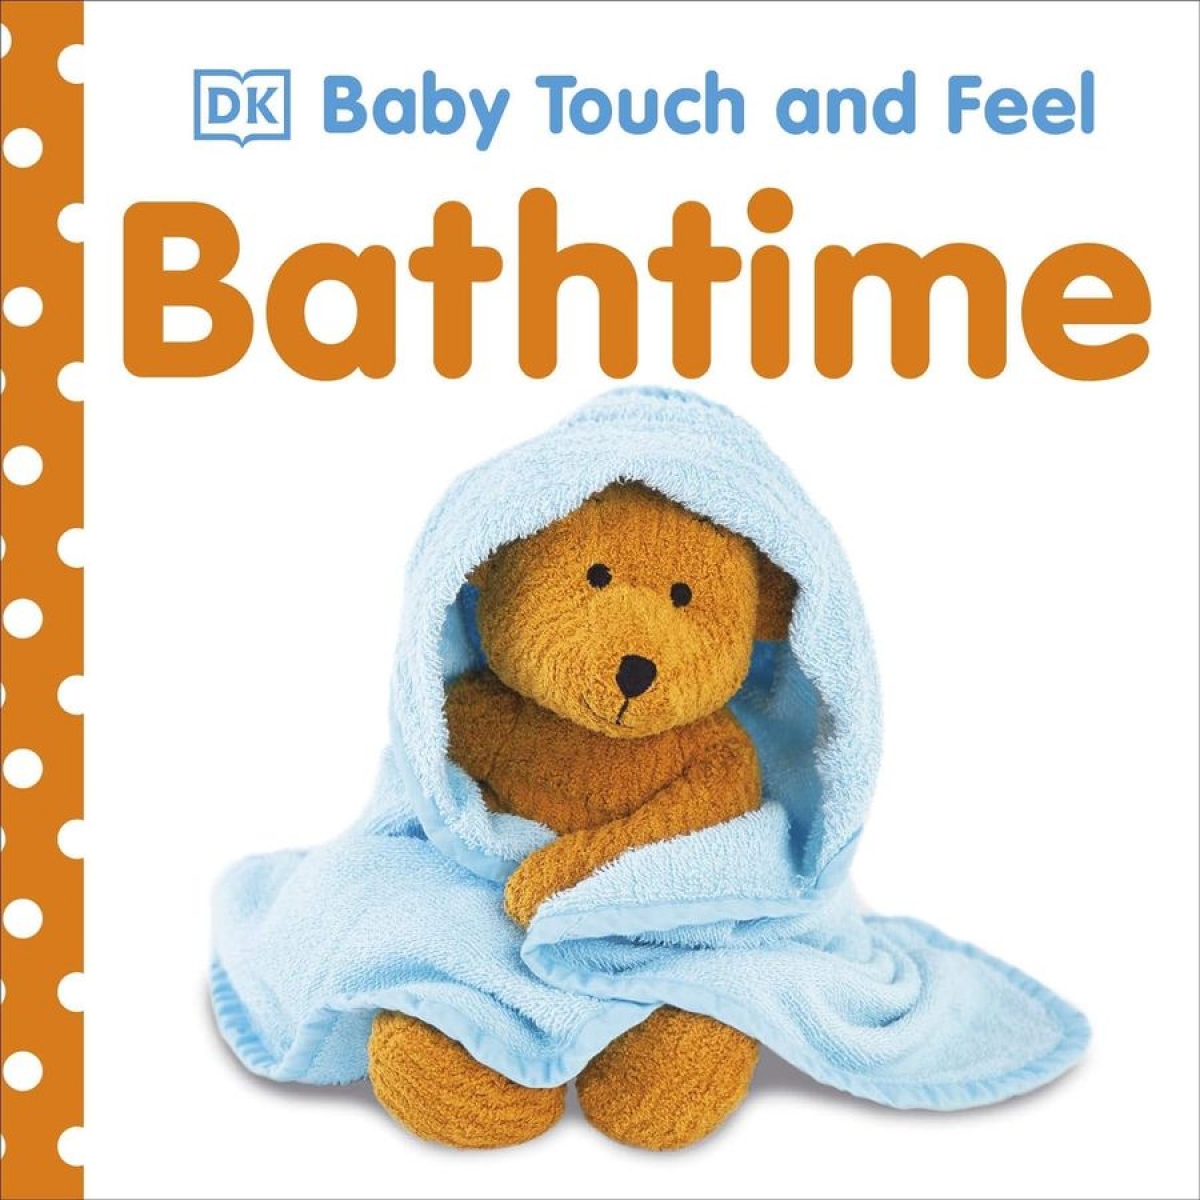 Dorling K. Bathtime (board book) 